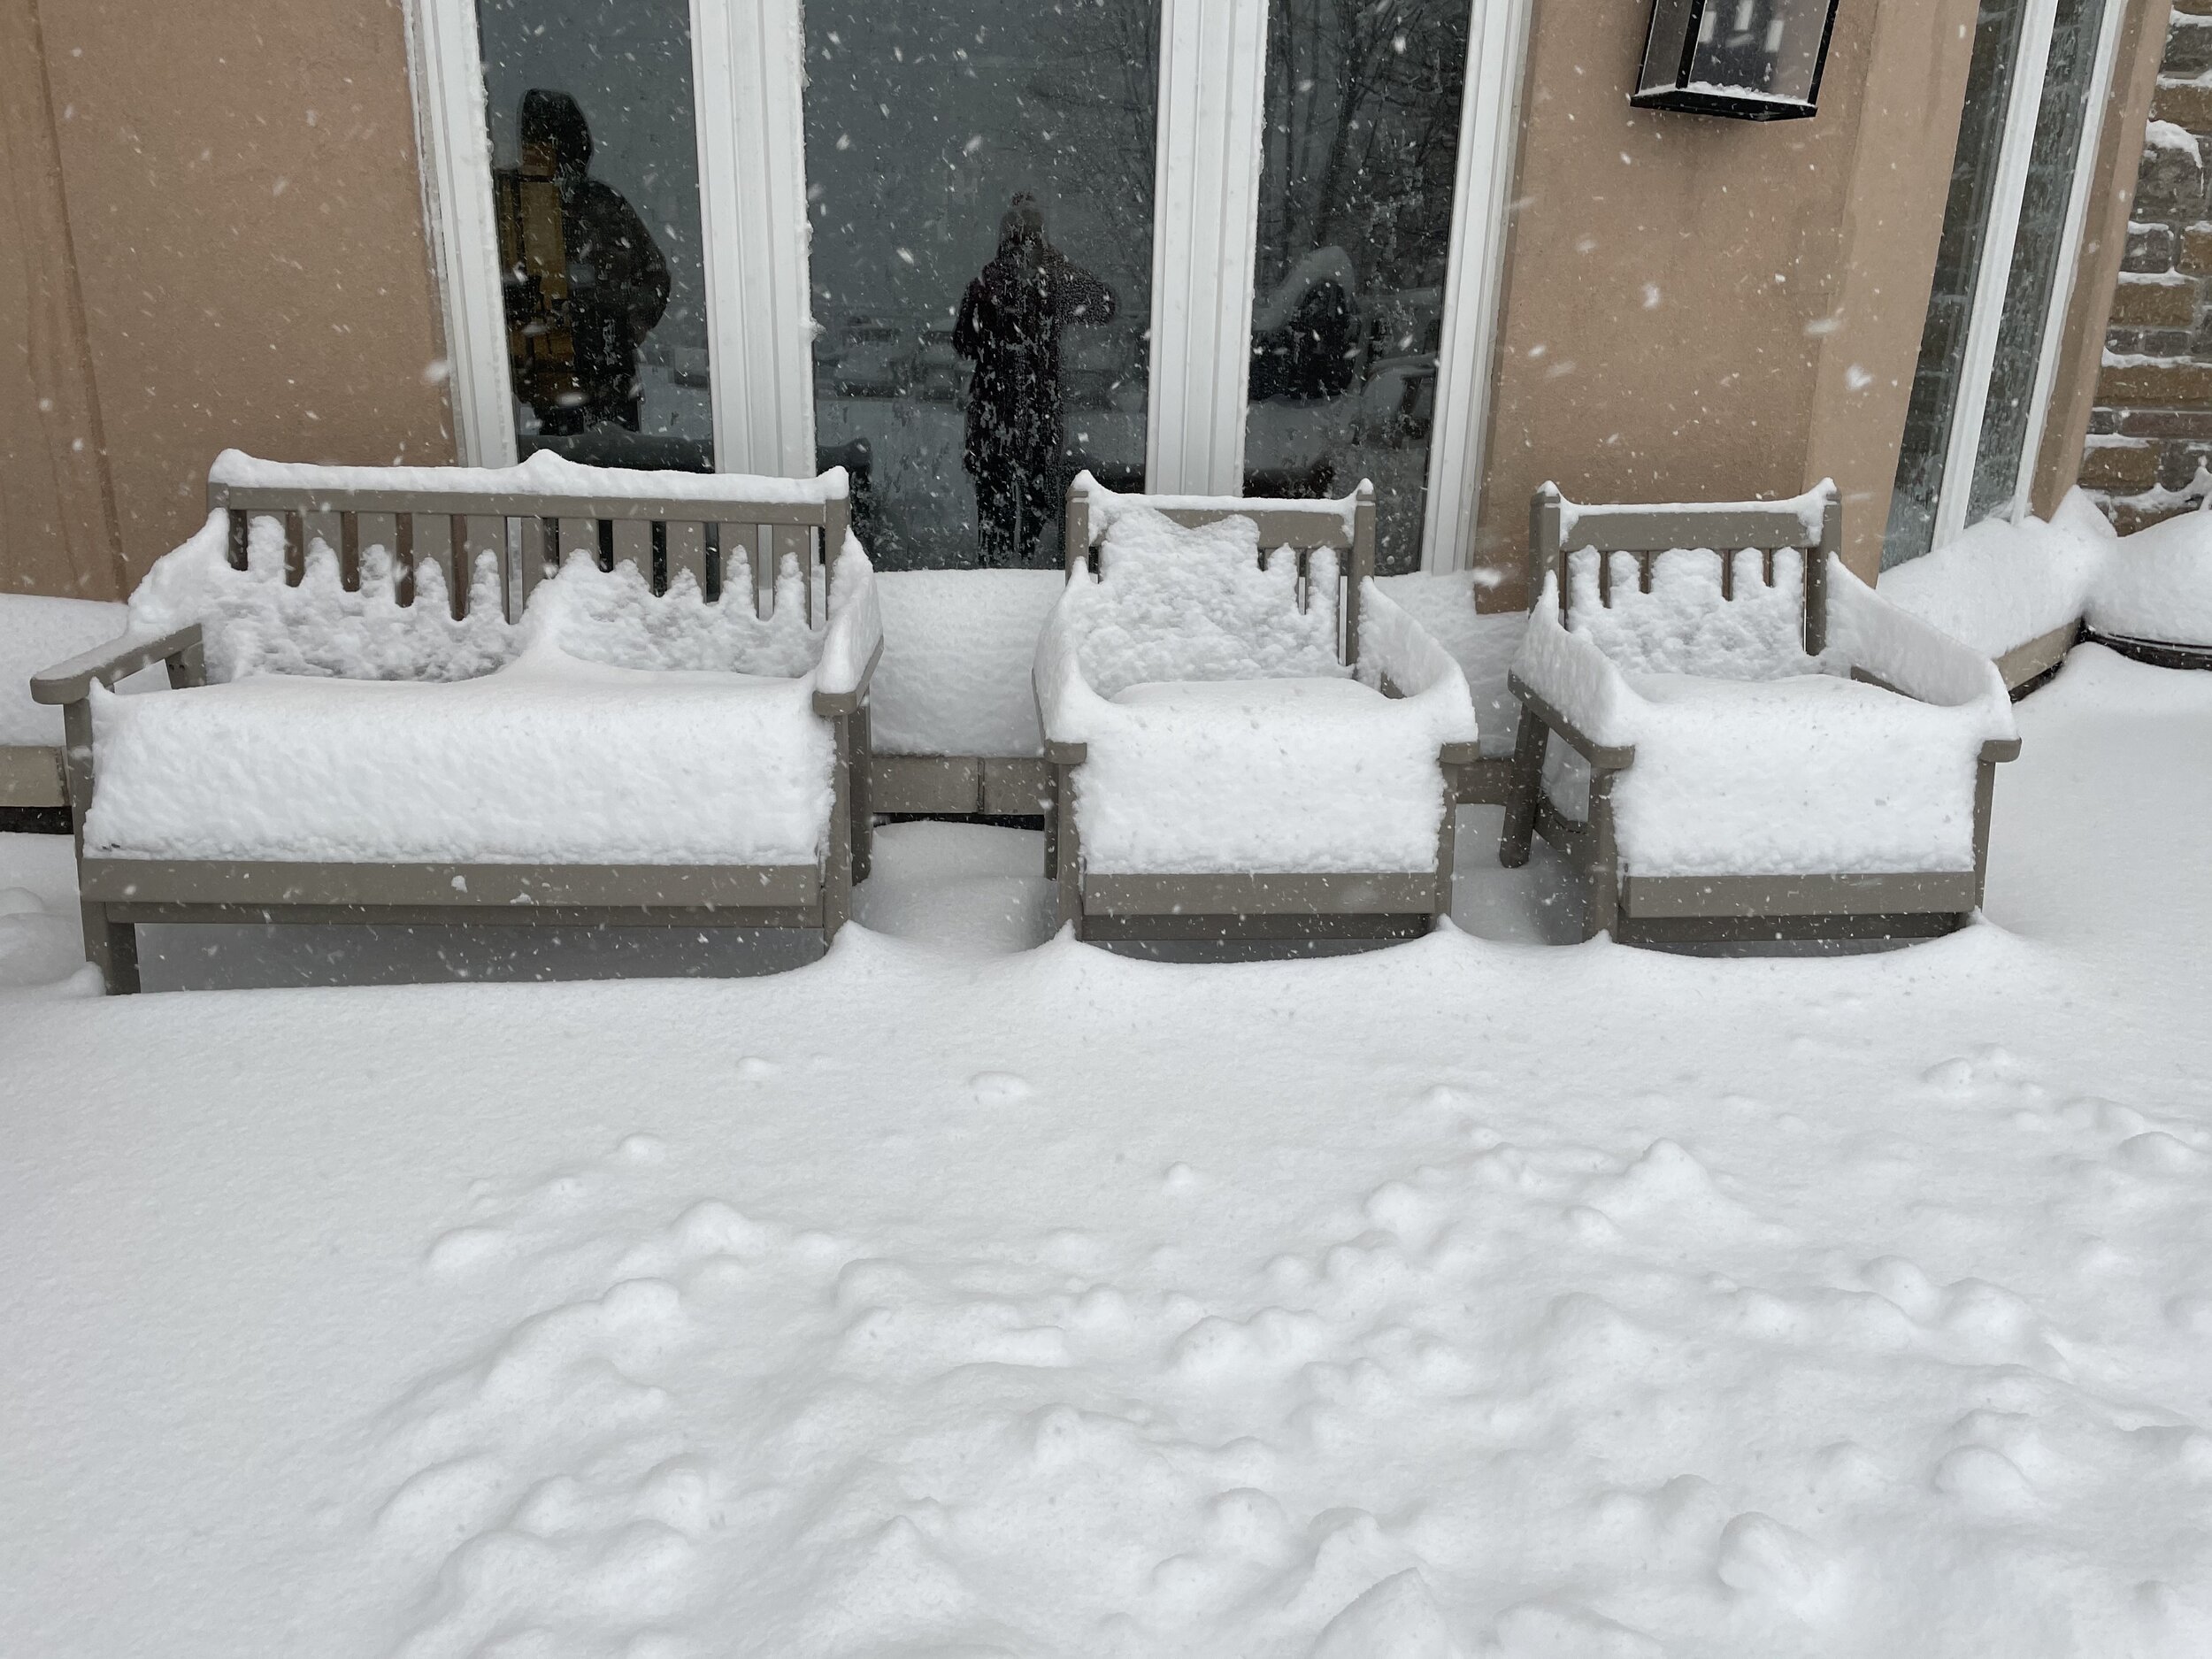 Three Snow Seats